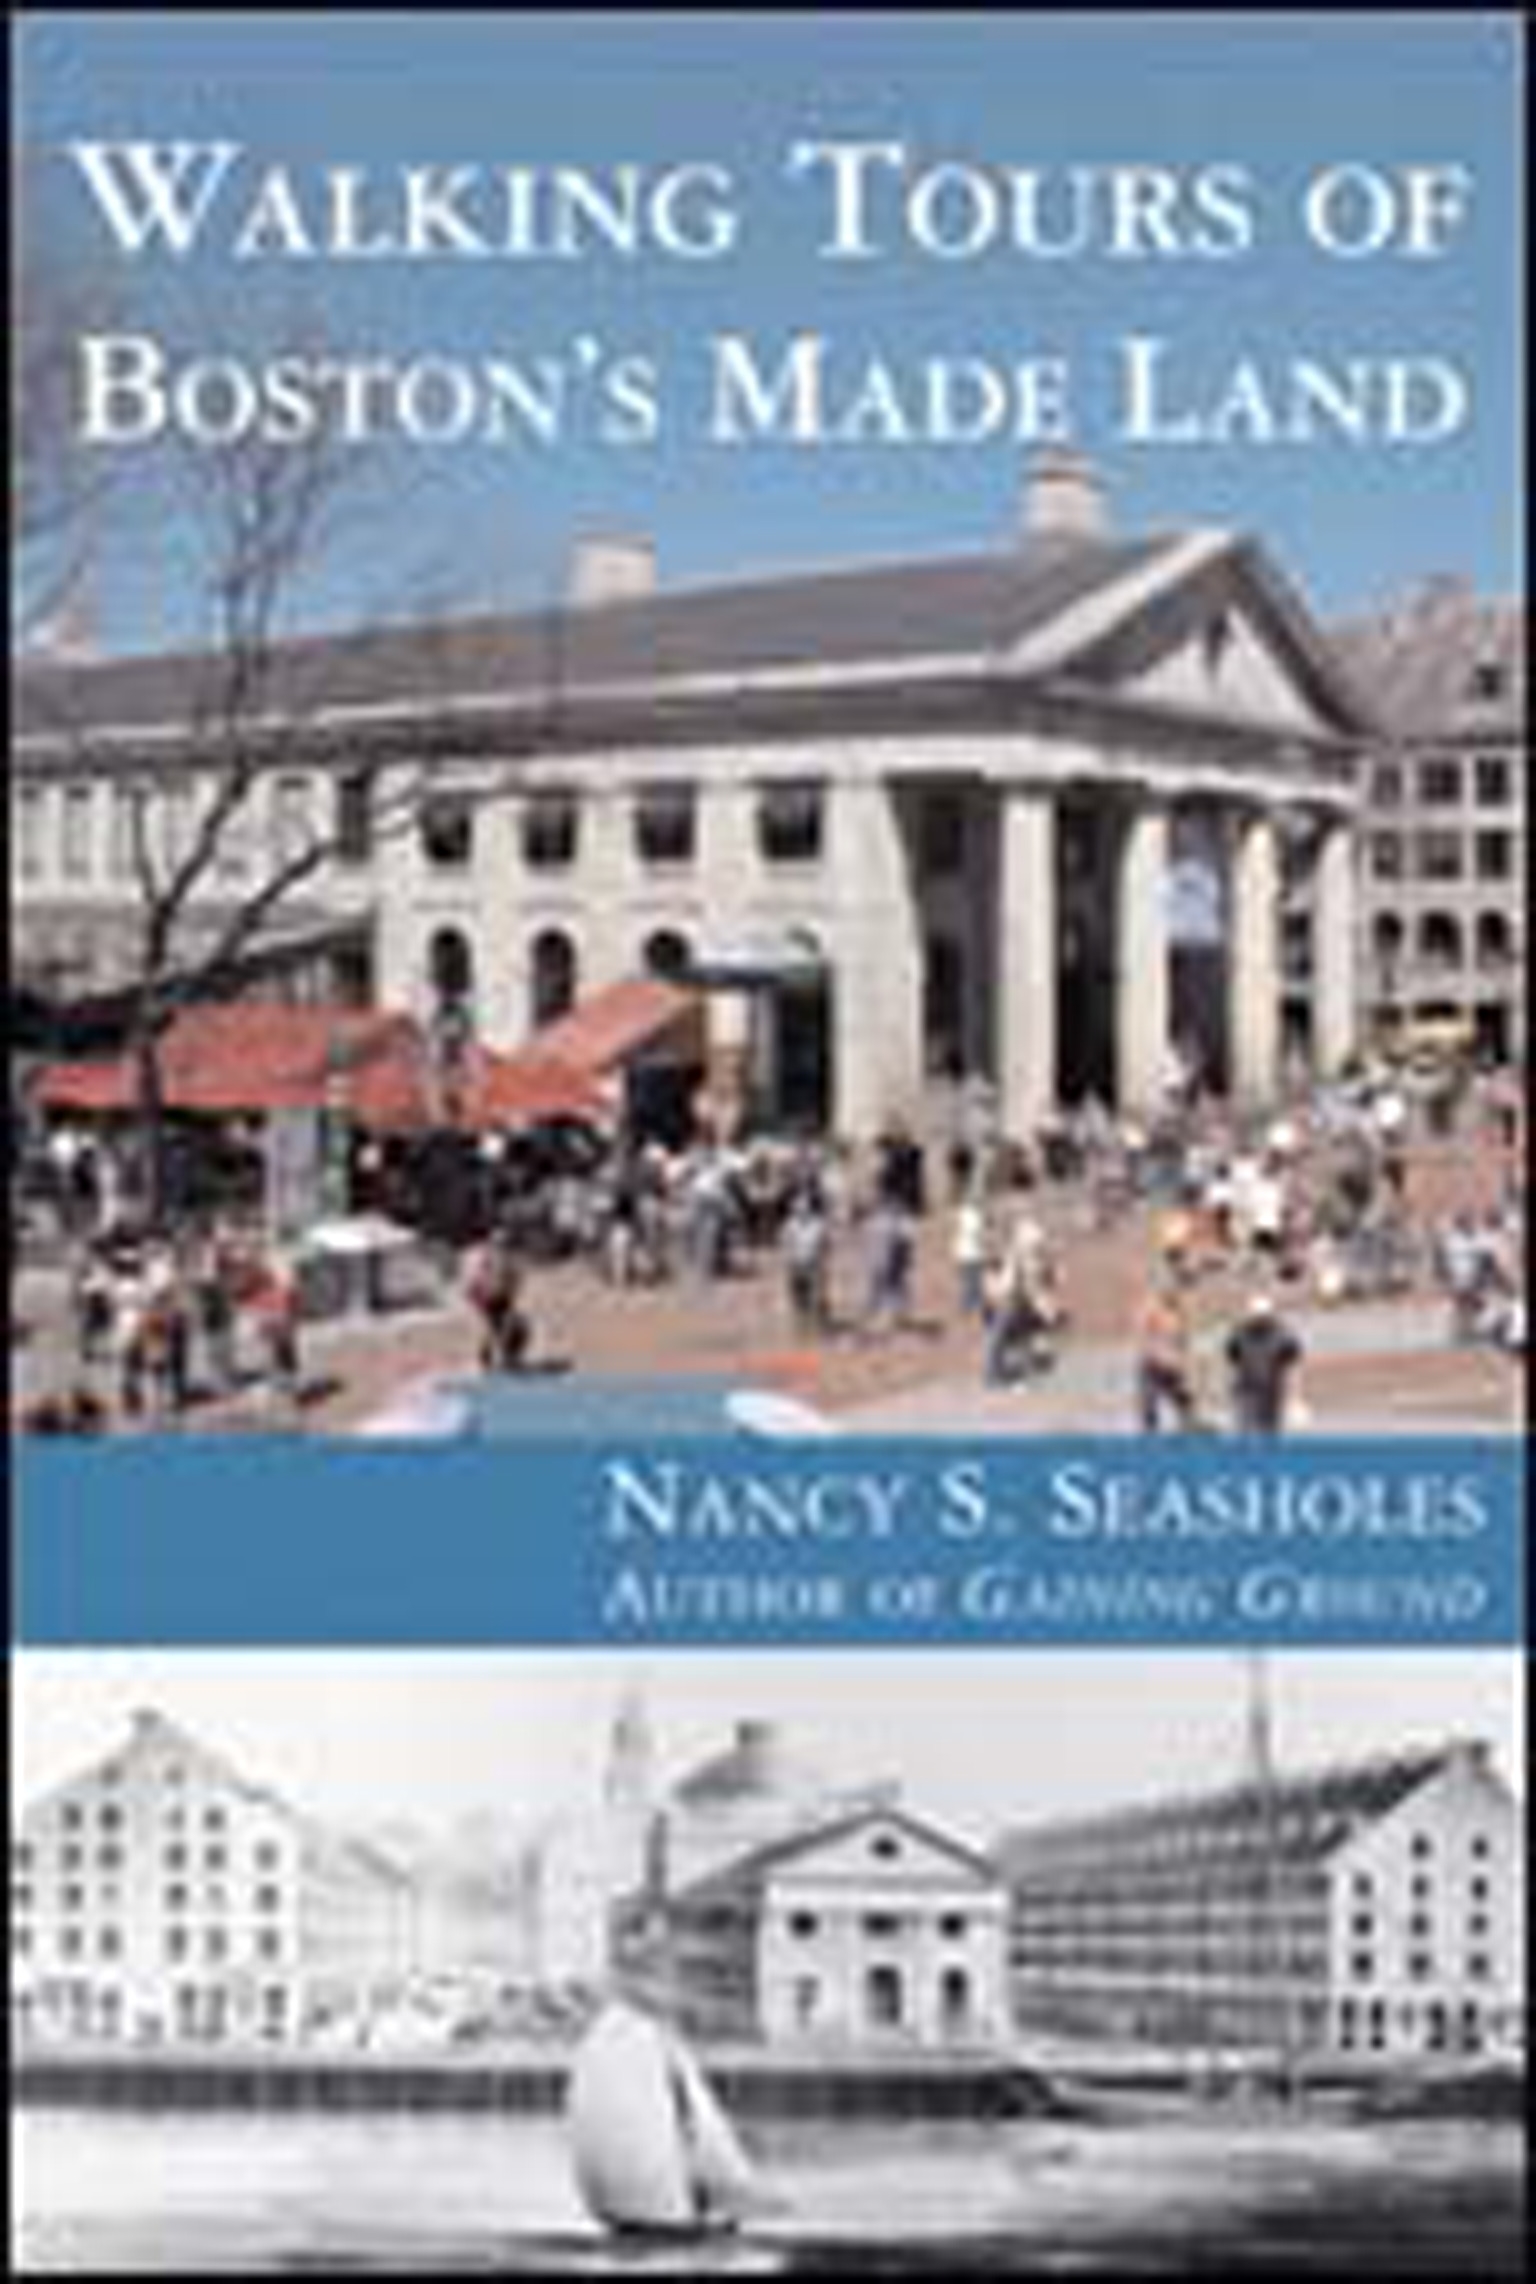 Walking Tours of Boston's Made Land by Nancy S. Seasholes - Penguin ...